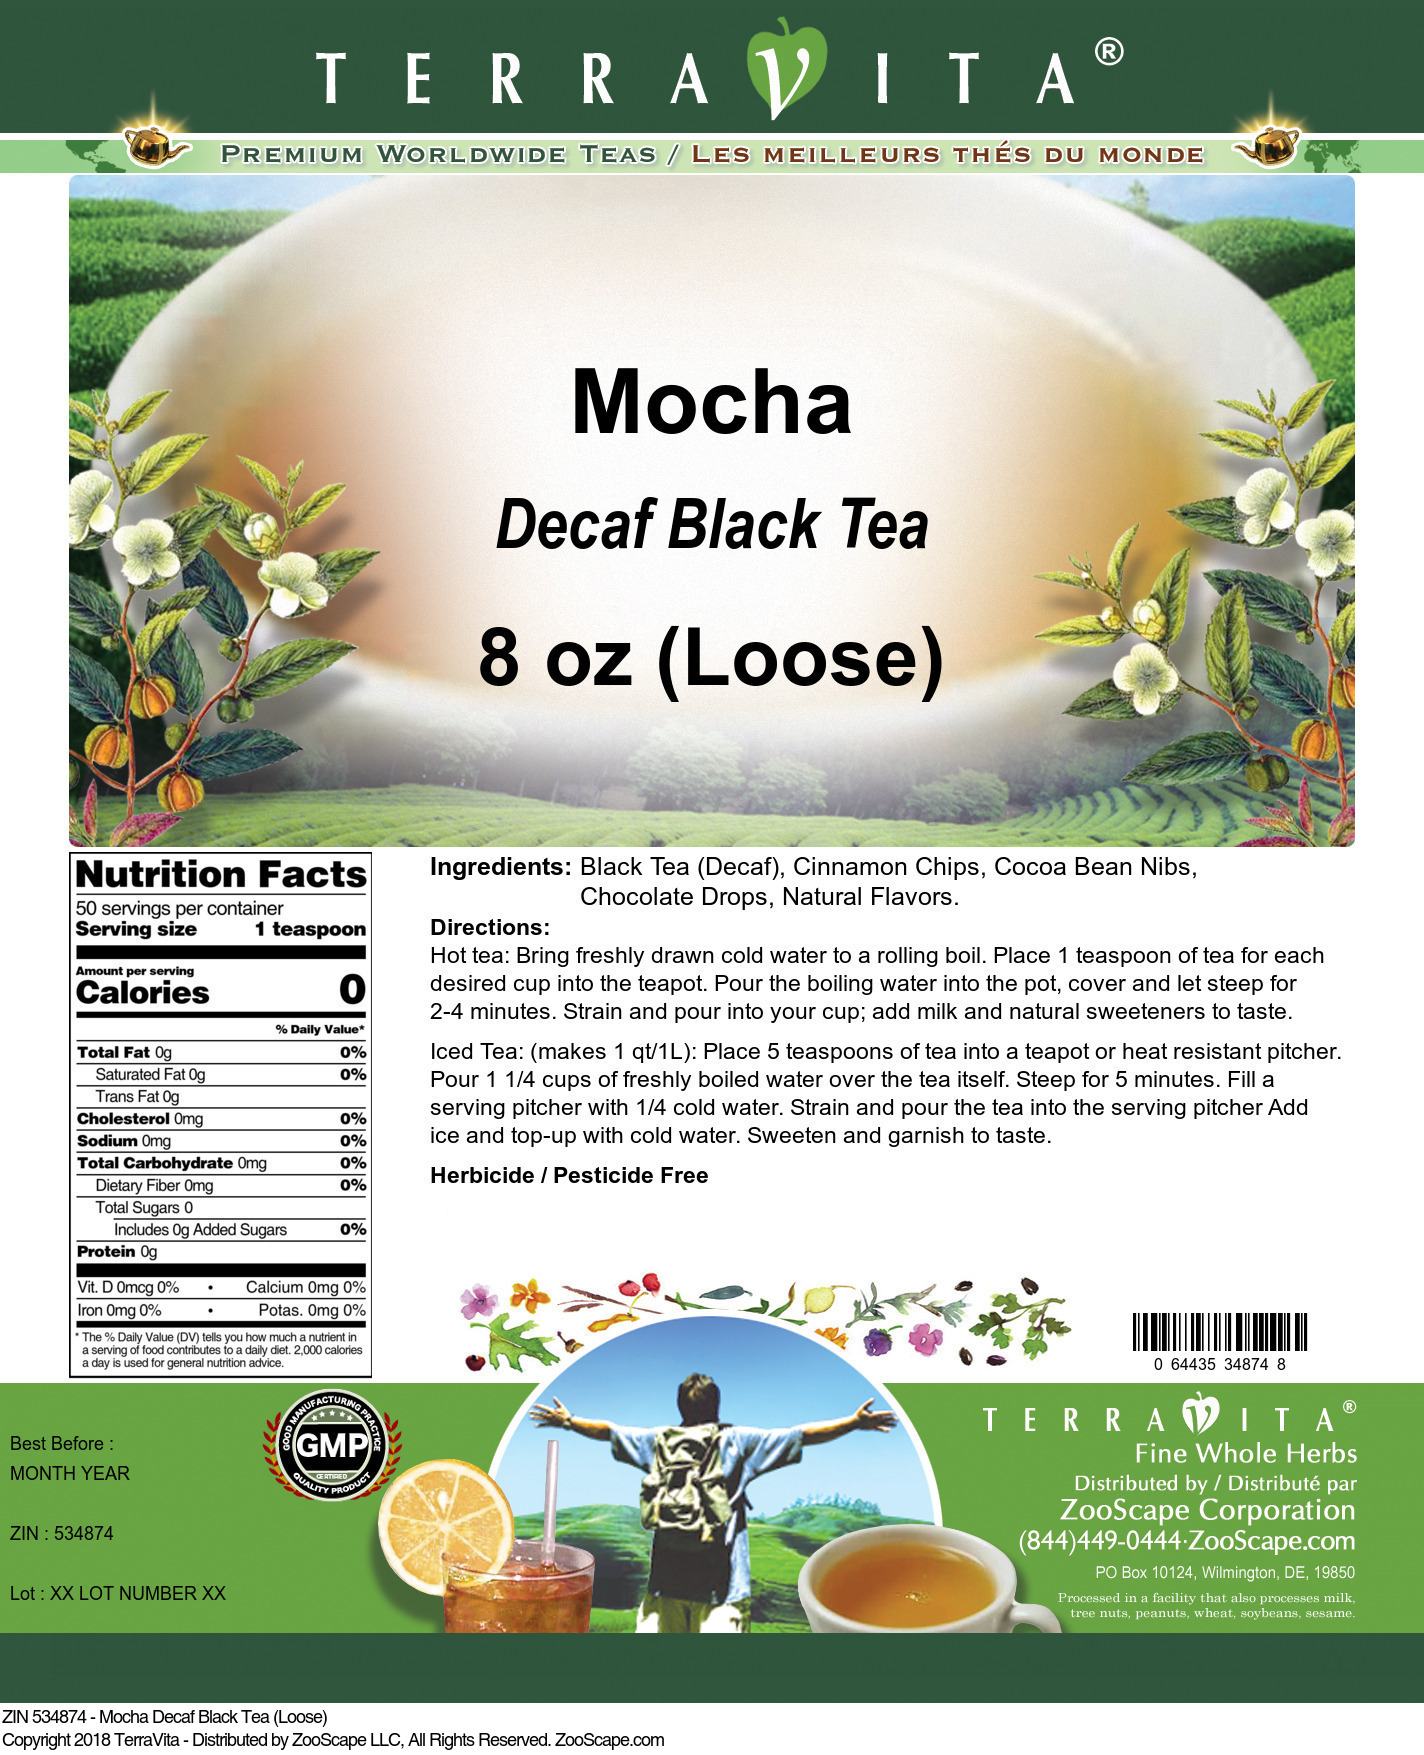 Mocha Decaf Black Tea (Loose) - Label